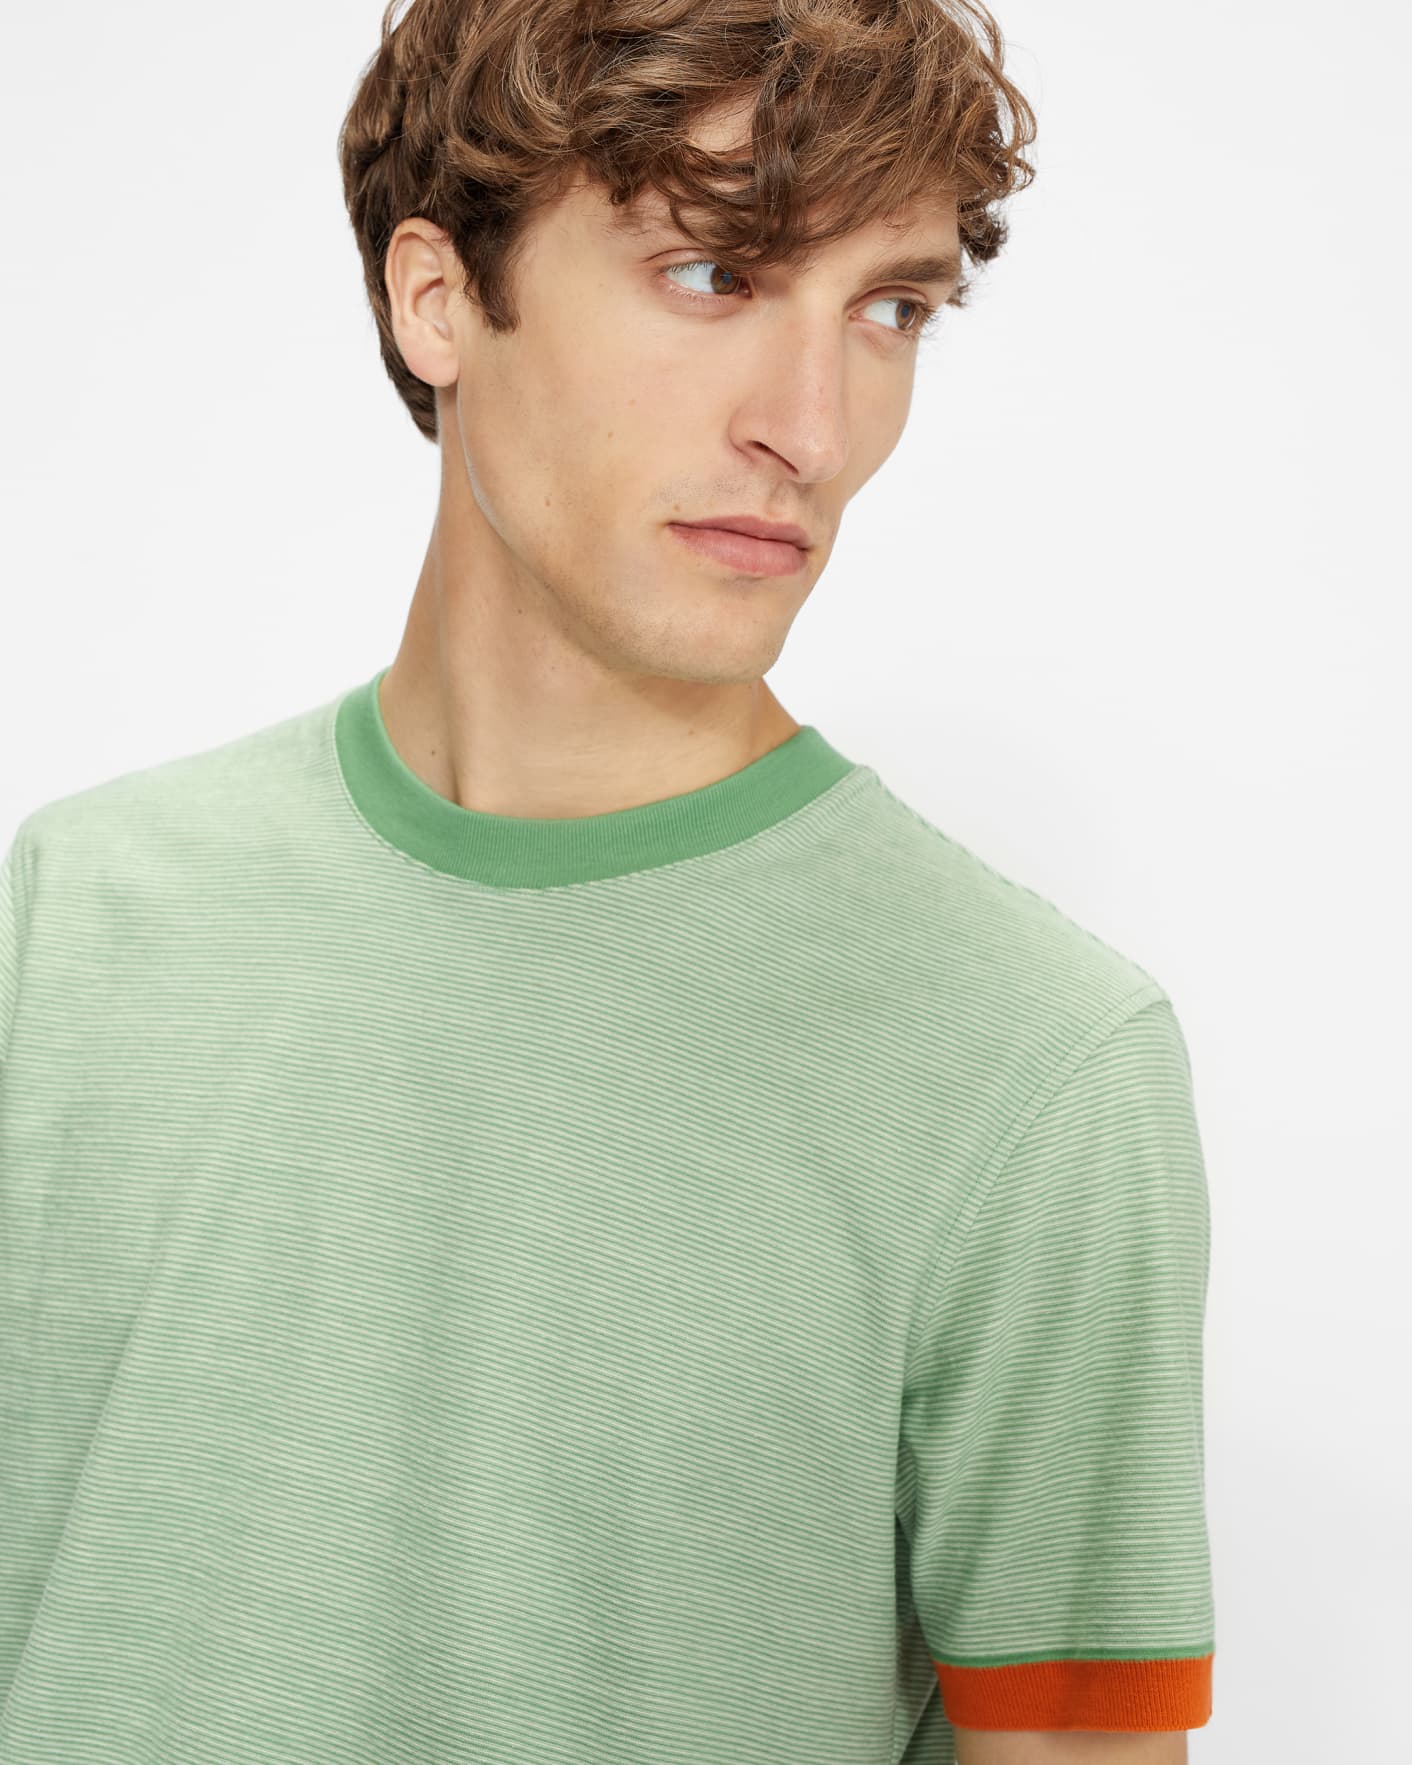 Vert pâle Tee-shirt avec rayures contrastées Ted Baker